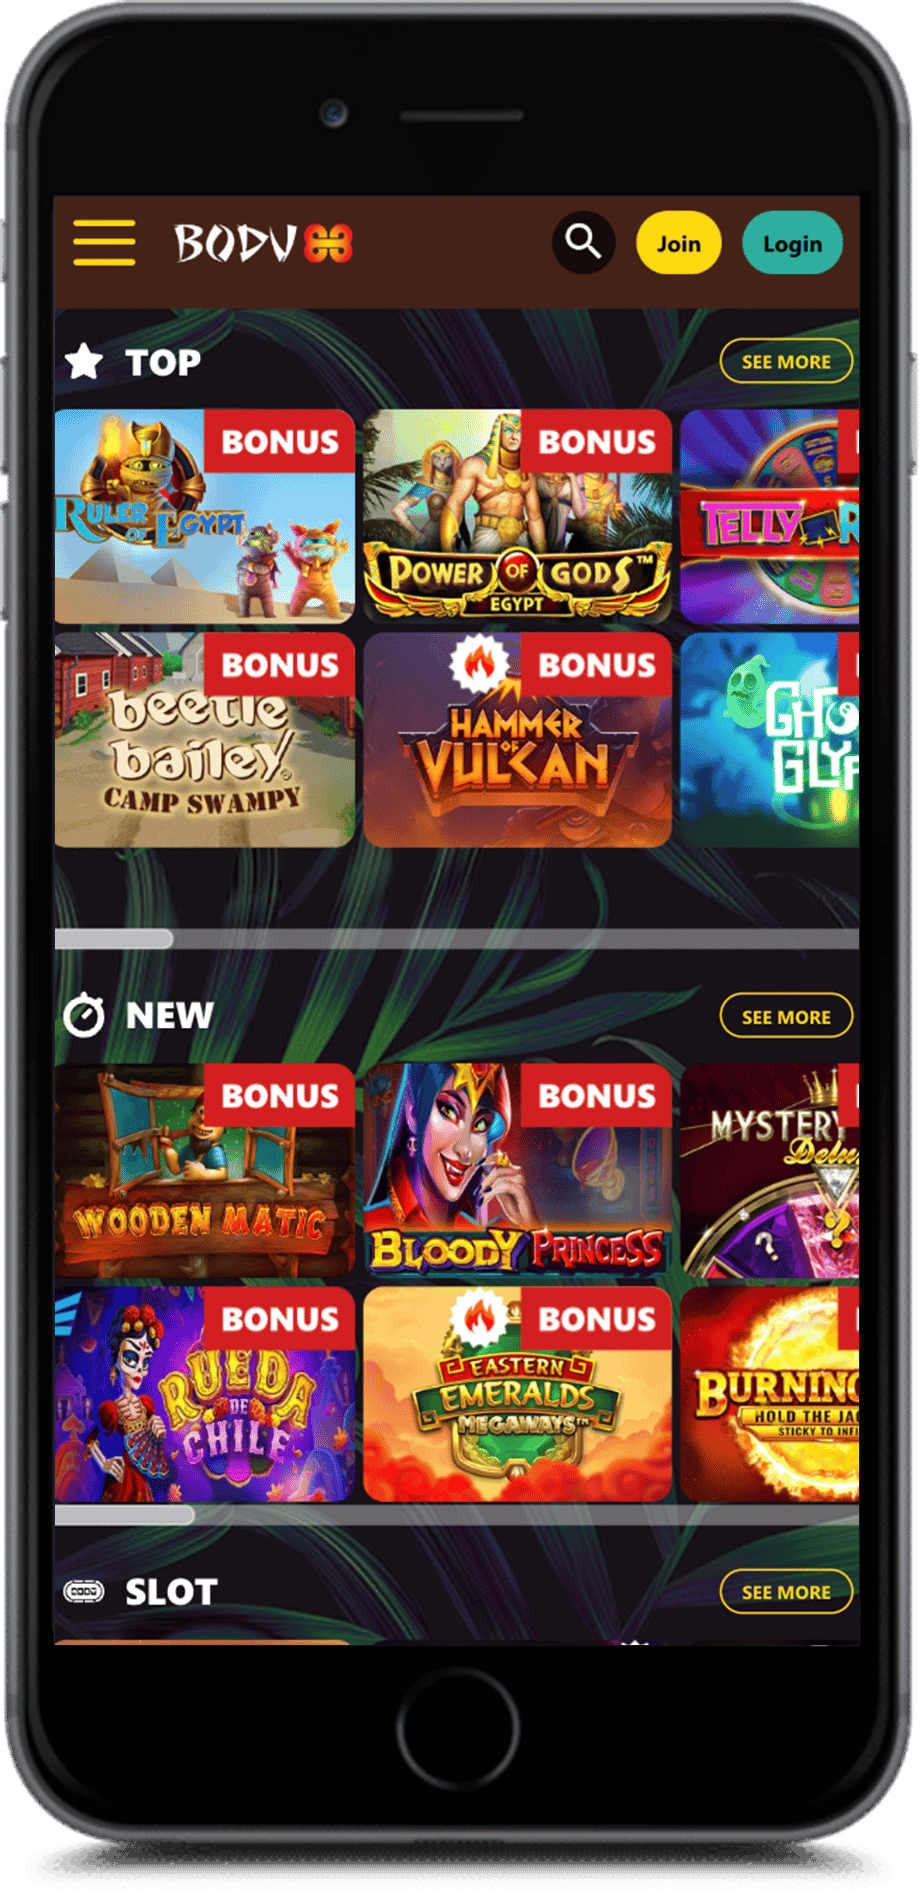 bodu88 casino no deposit bonus